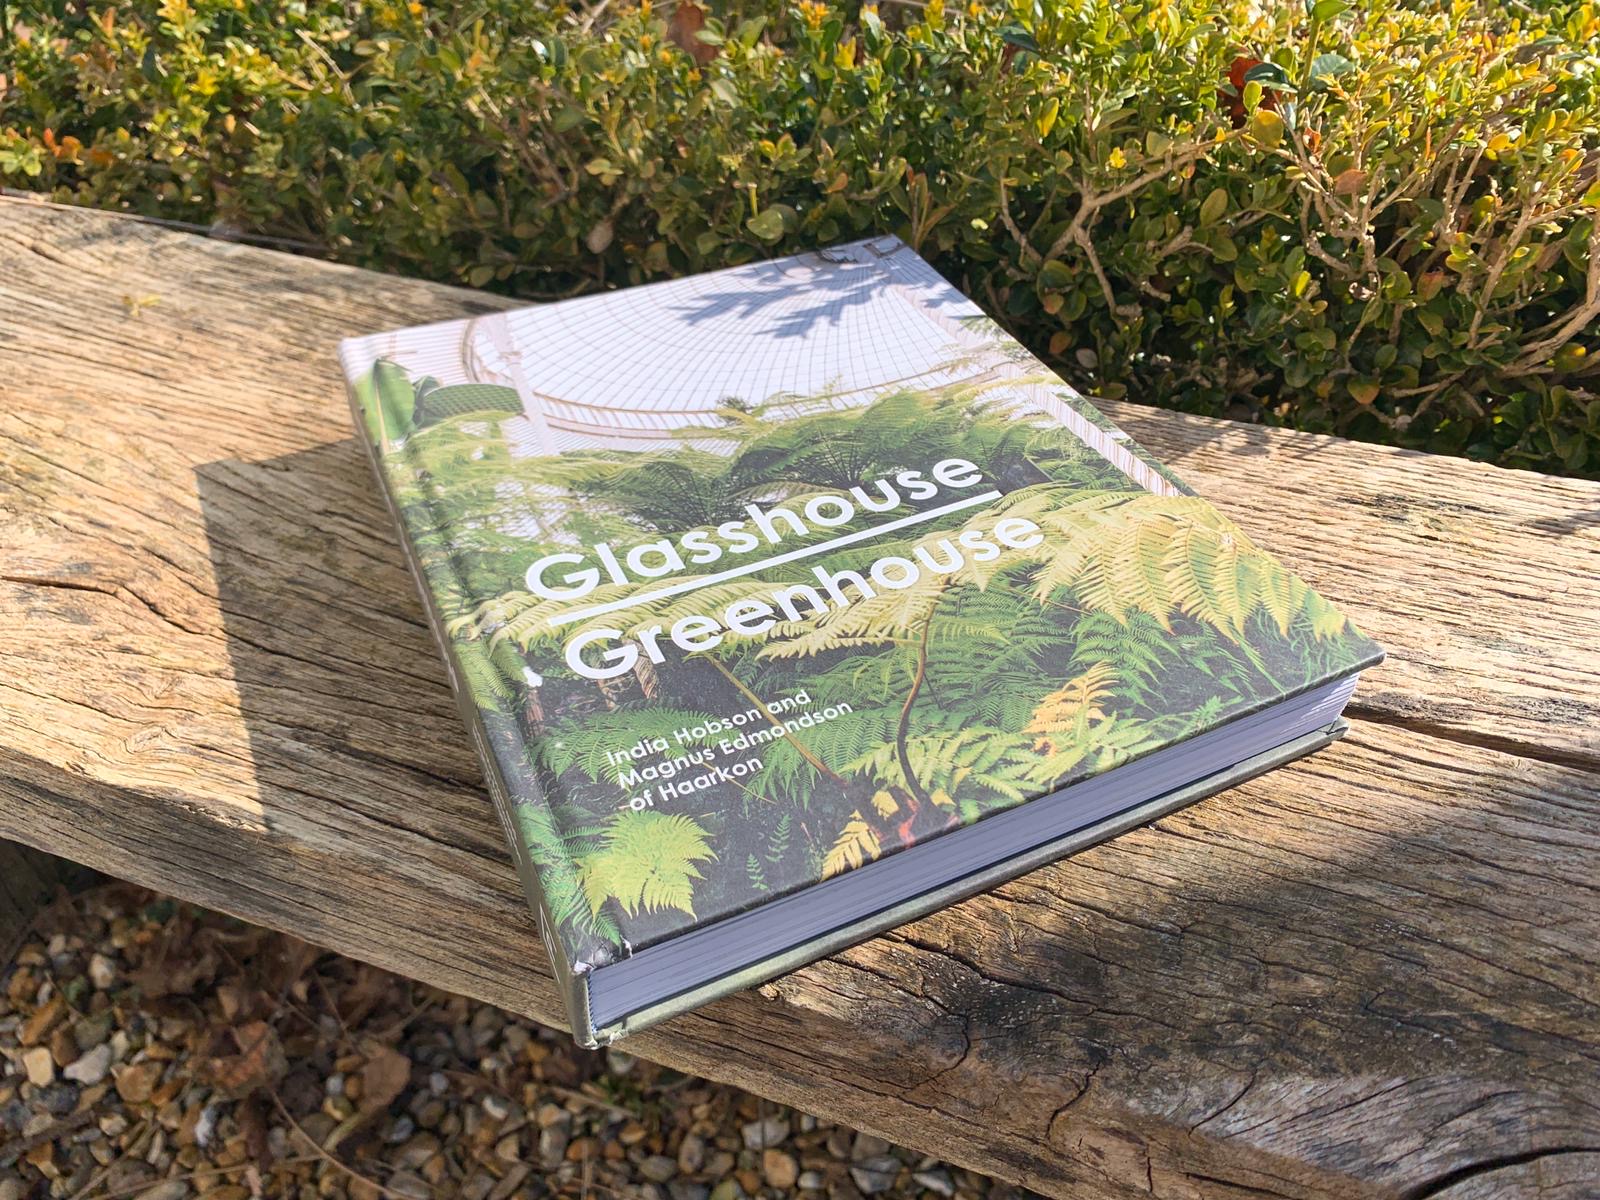 Glasshouse Greenhouse Book.